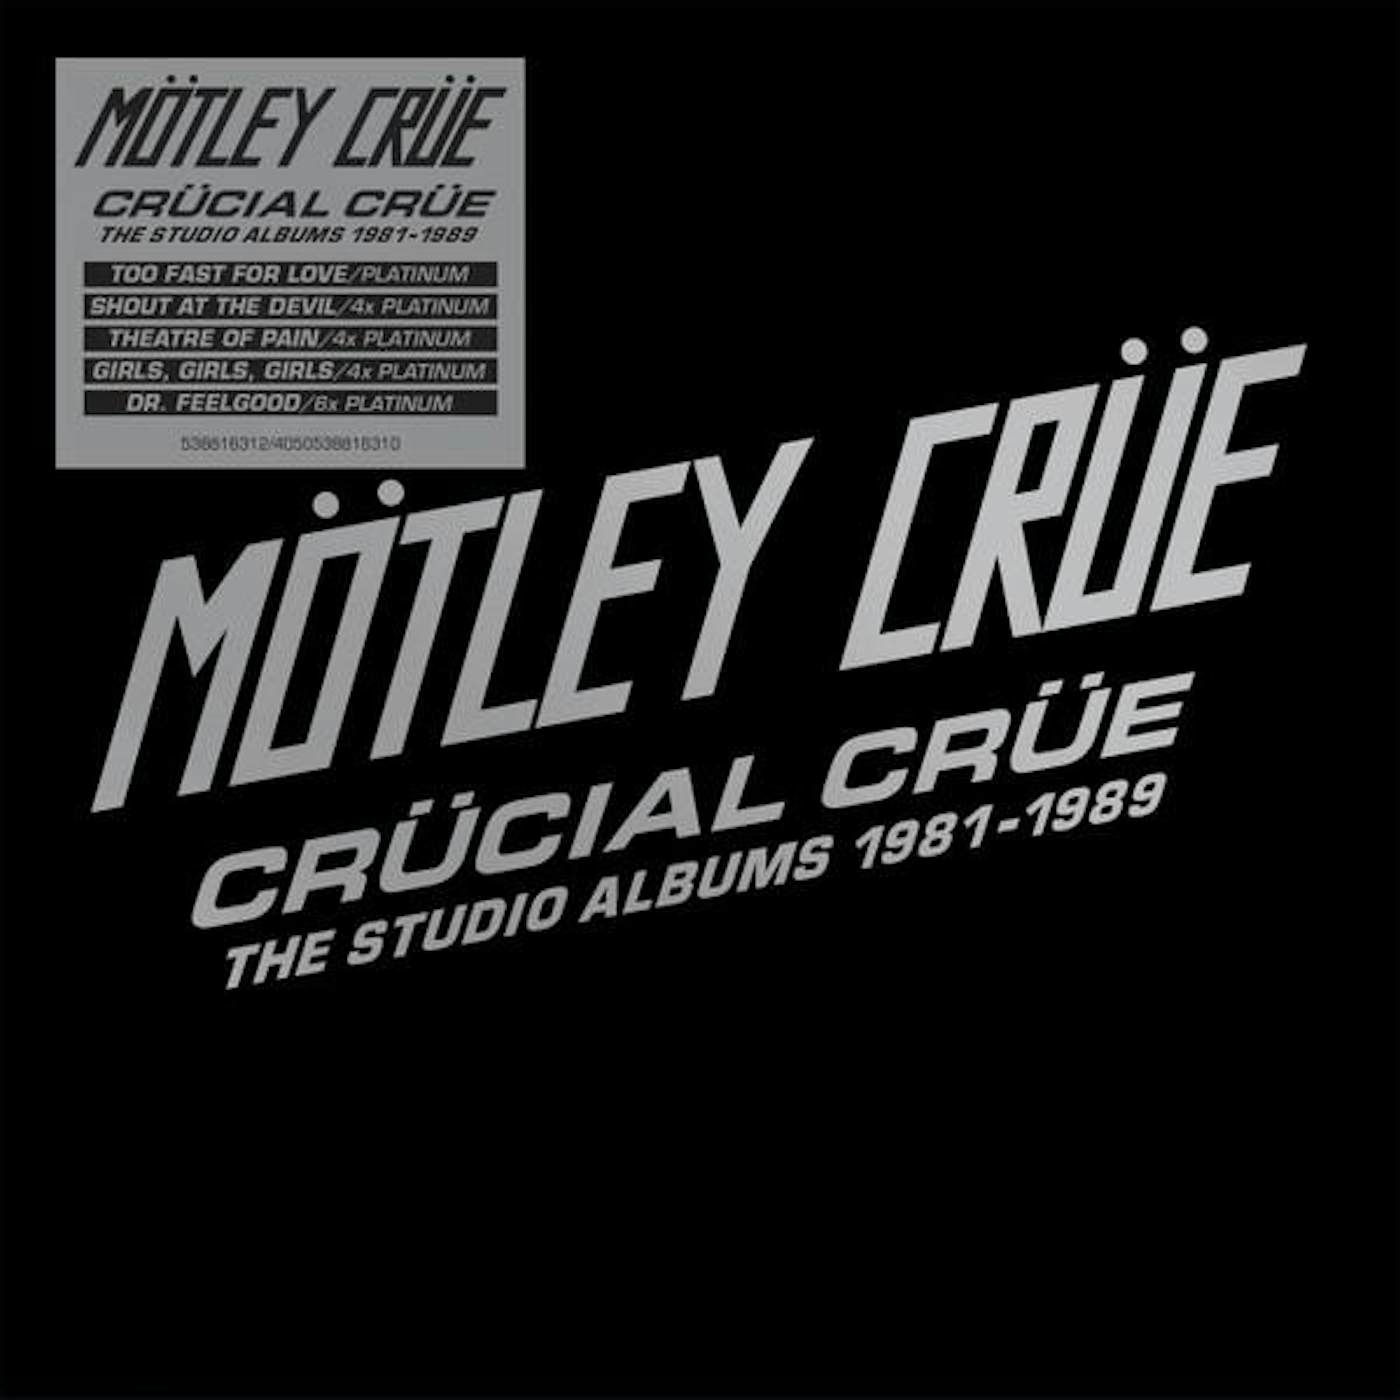 Mötley Crüe CRUCIAL CRUE - THE STUDIO ALBUMS 1981-1989 (LIMITED